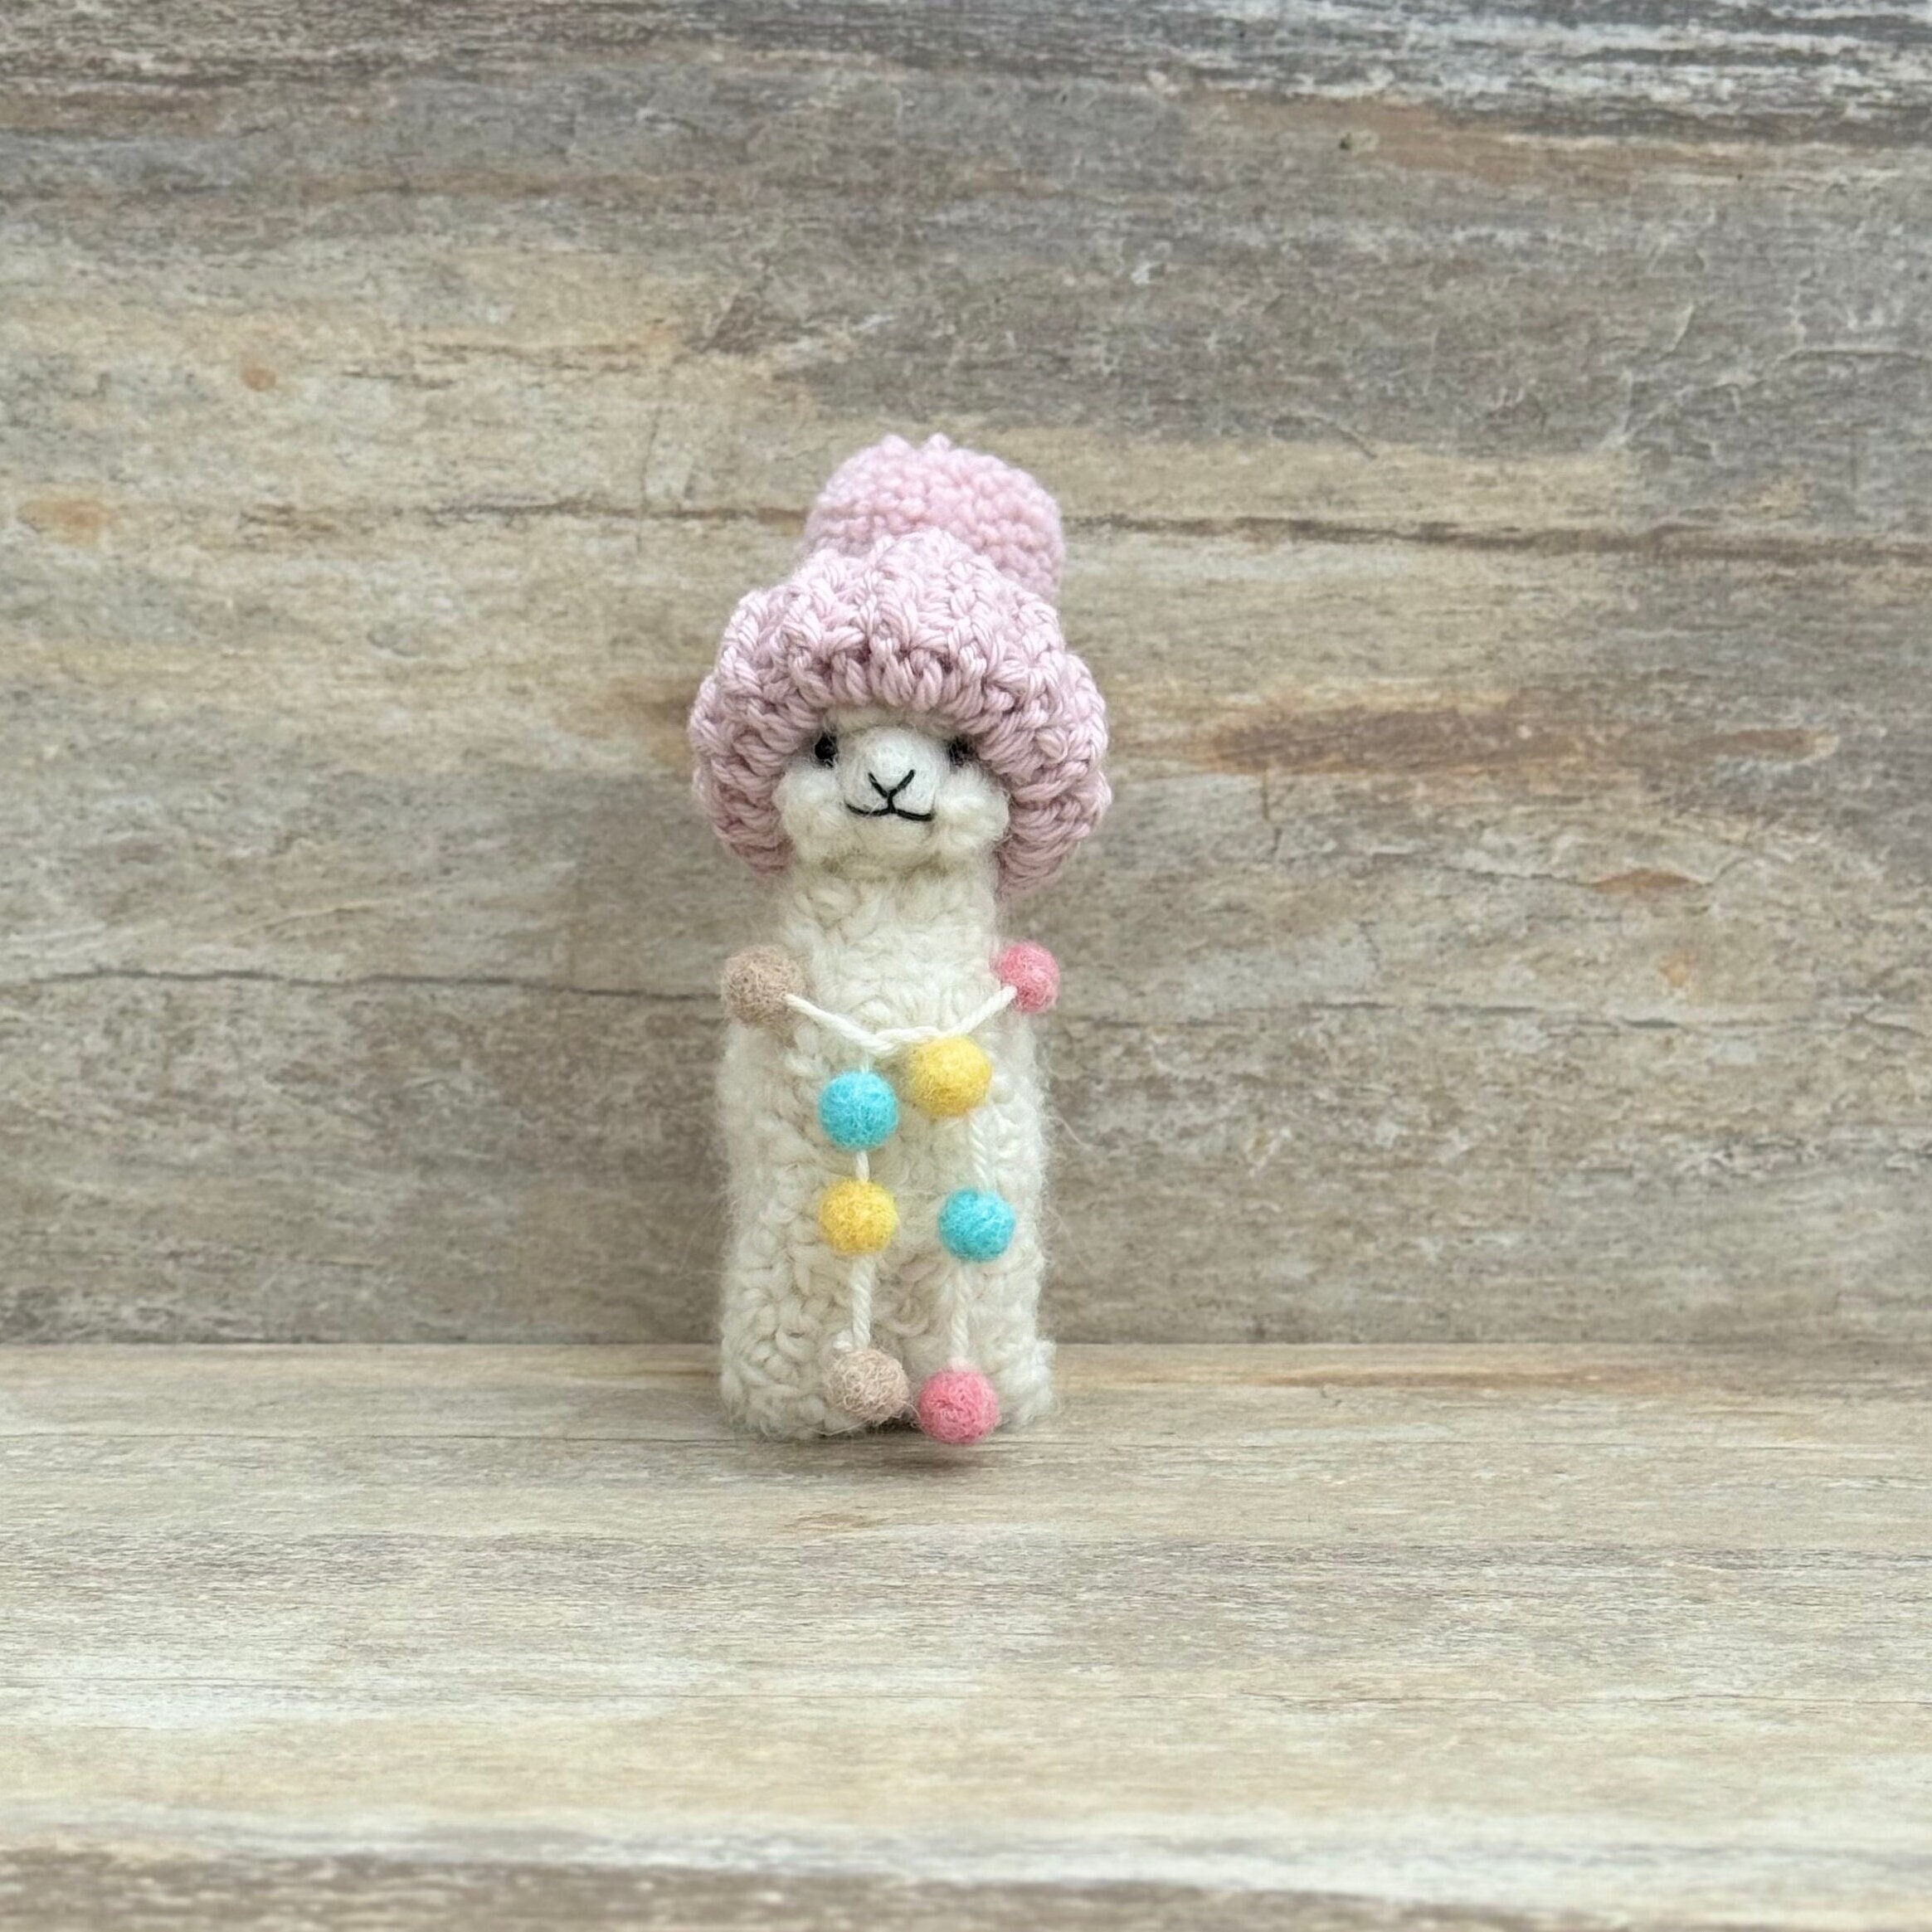 White Baby Alpaca Yarn DK for Crocheting or Knitting/ INDIECITA Double  Knitting 4/9 Baby Alpaca Yarn 